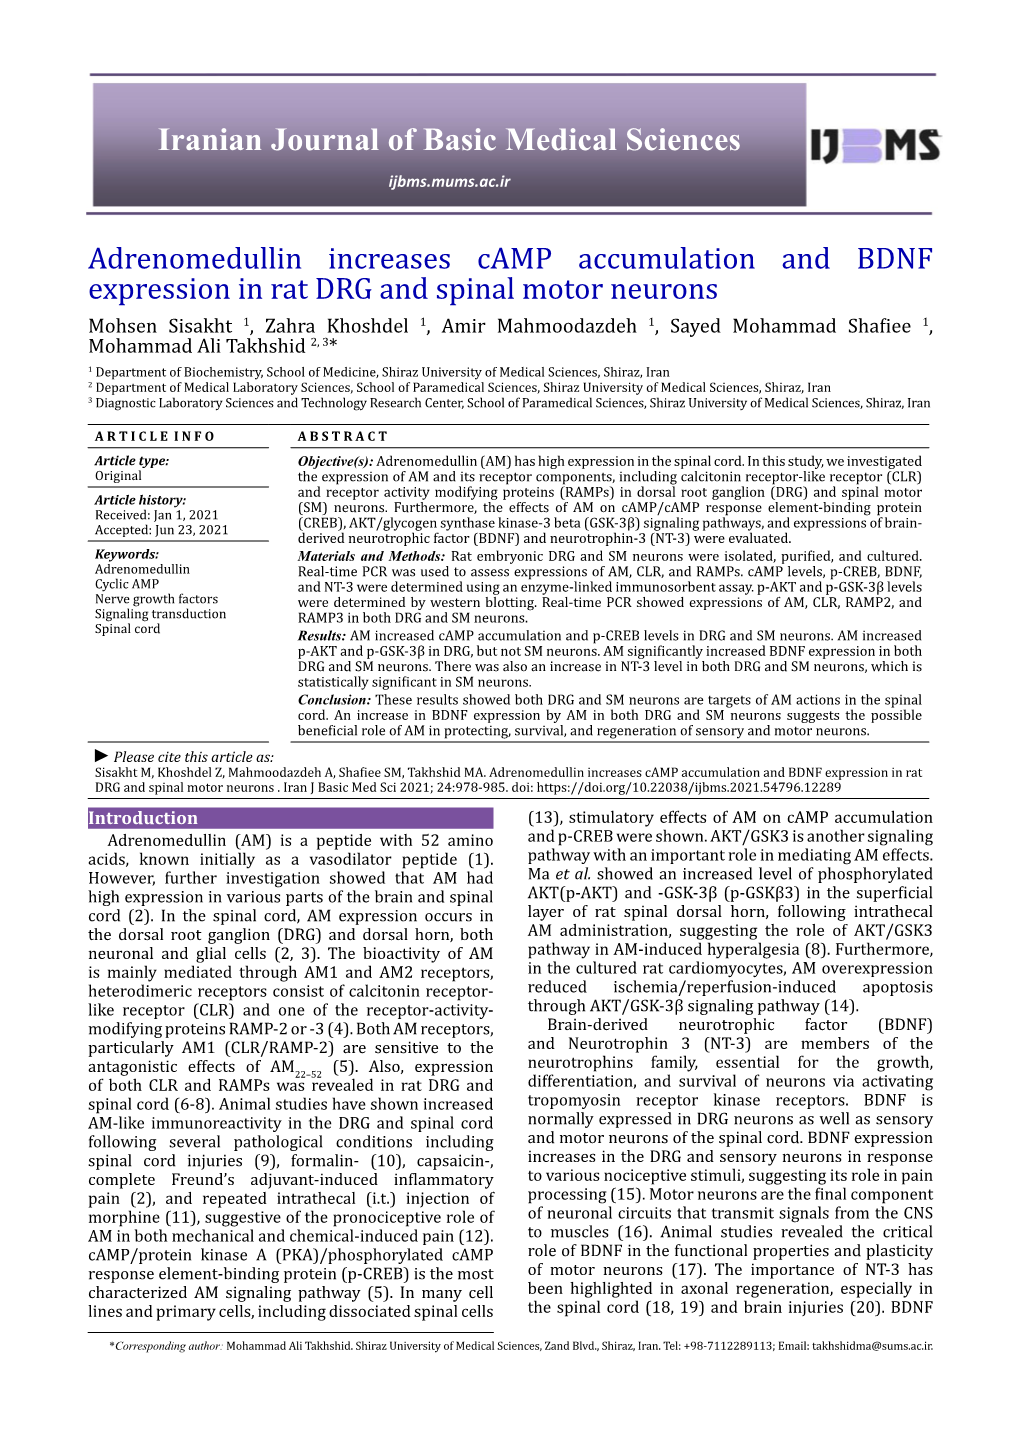 Adrenomedullin Increases Camp Accumulation and BDNF